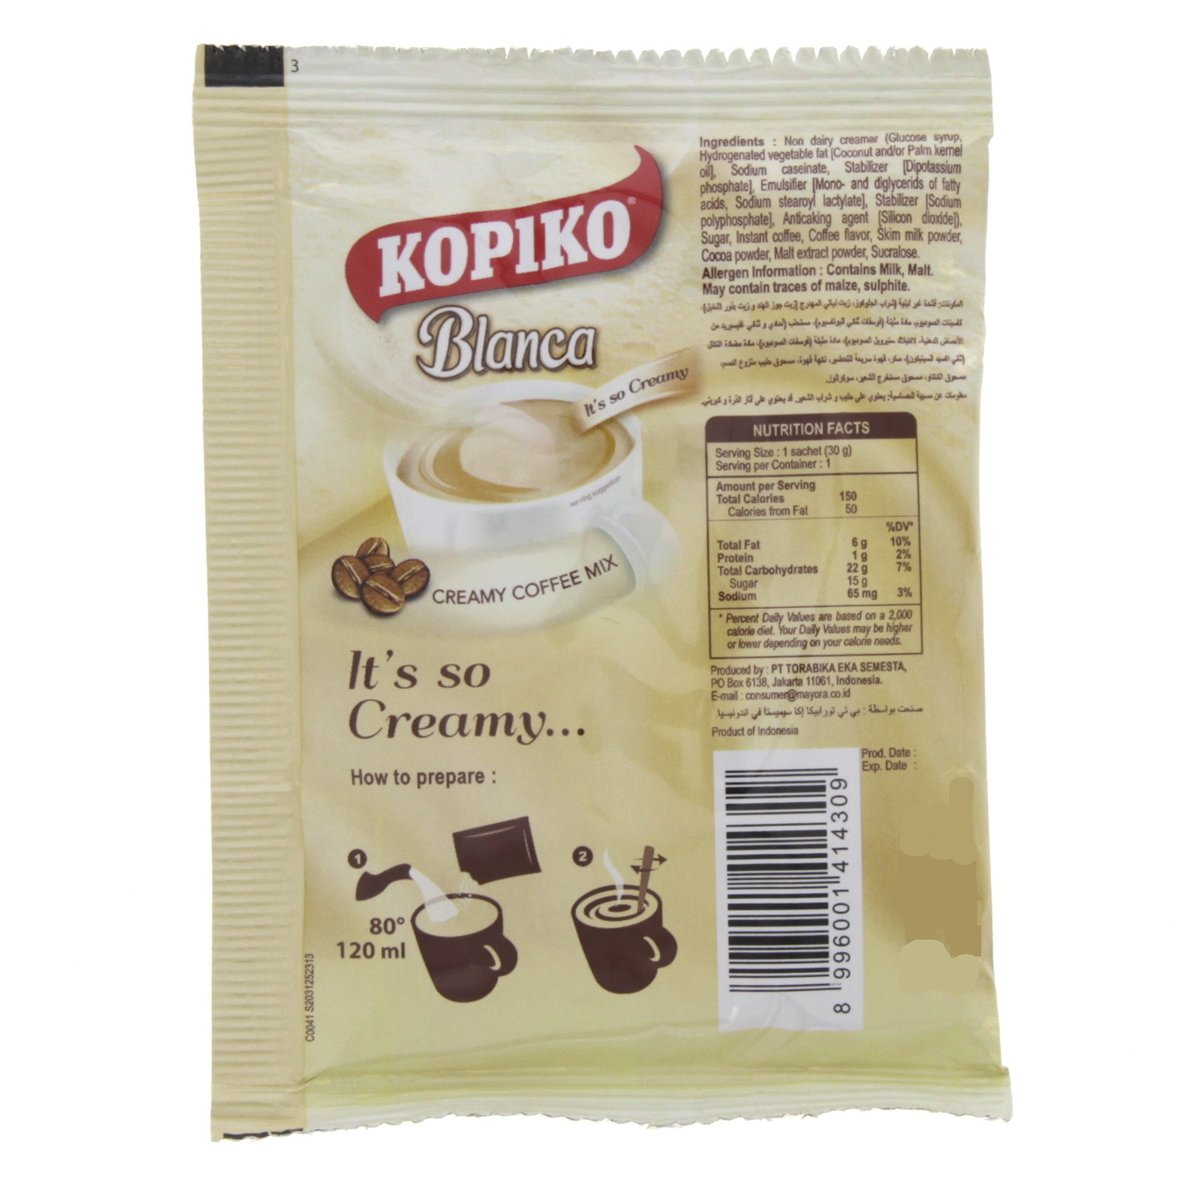 Kopiko Blanca Creamy Coffee Mix 30 g